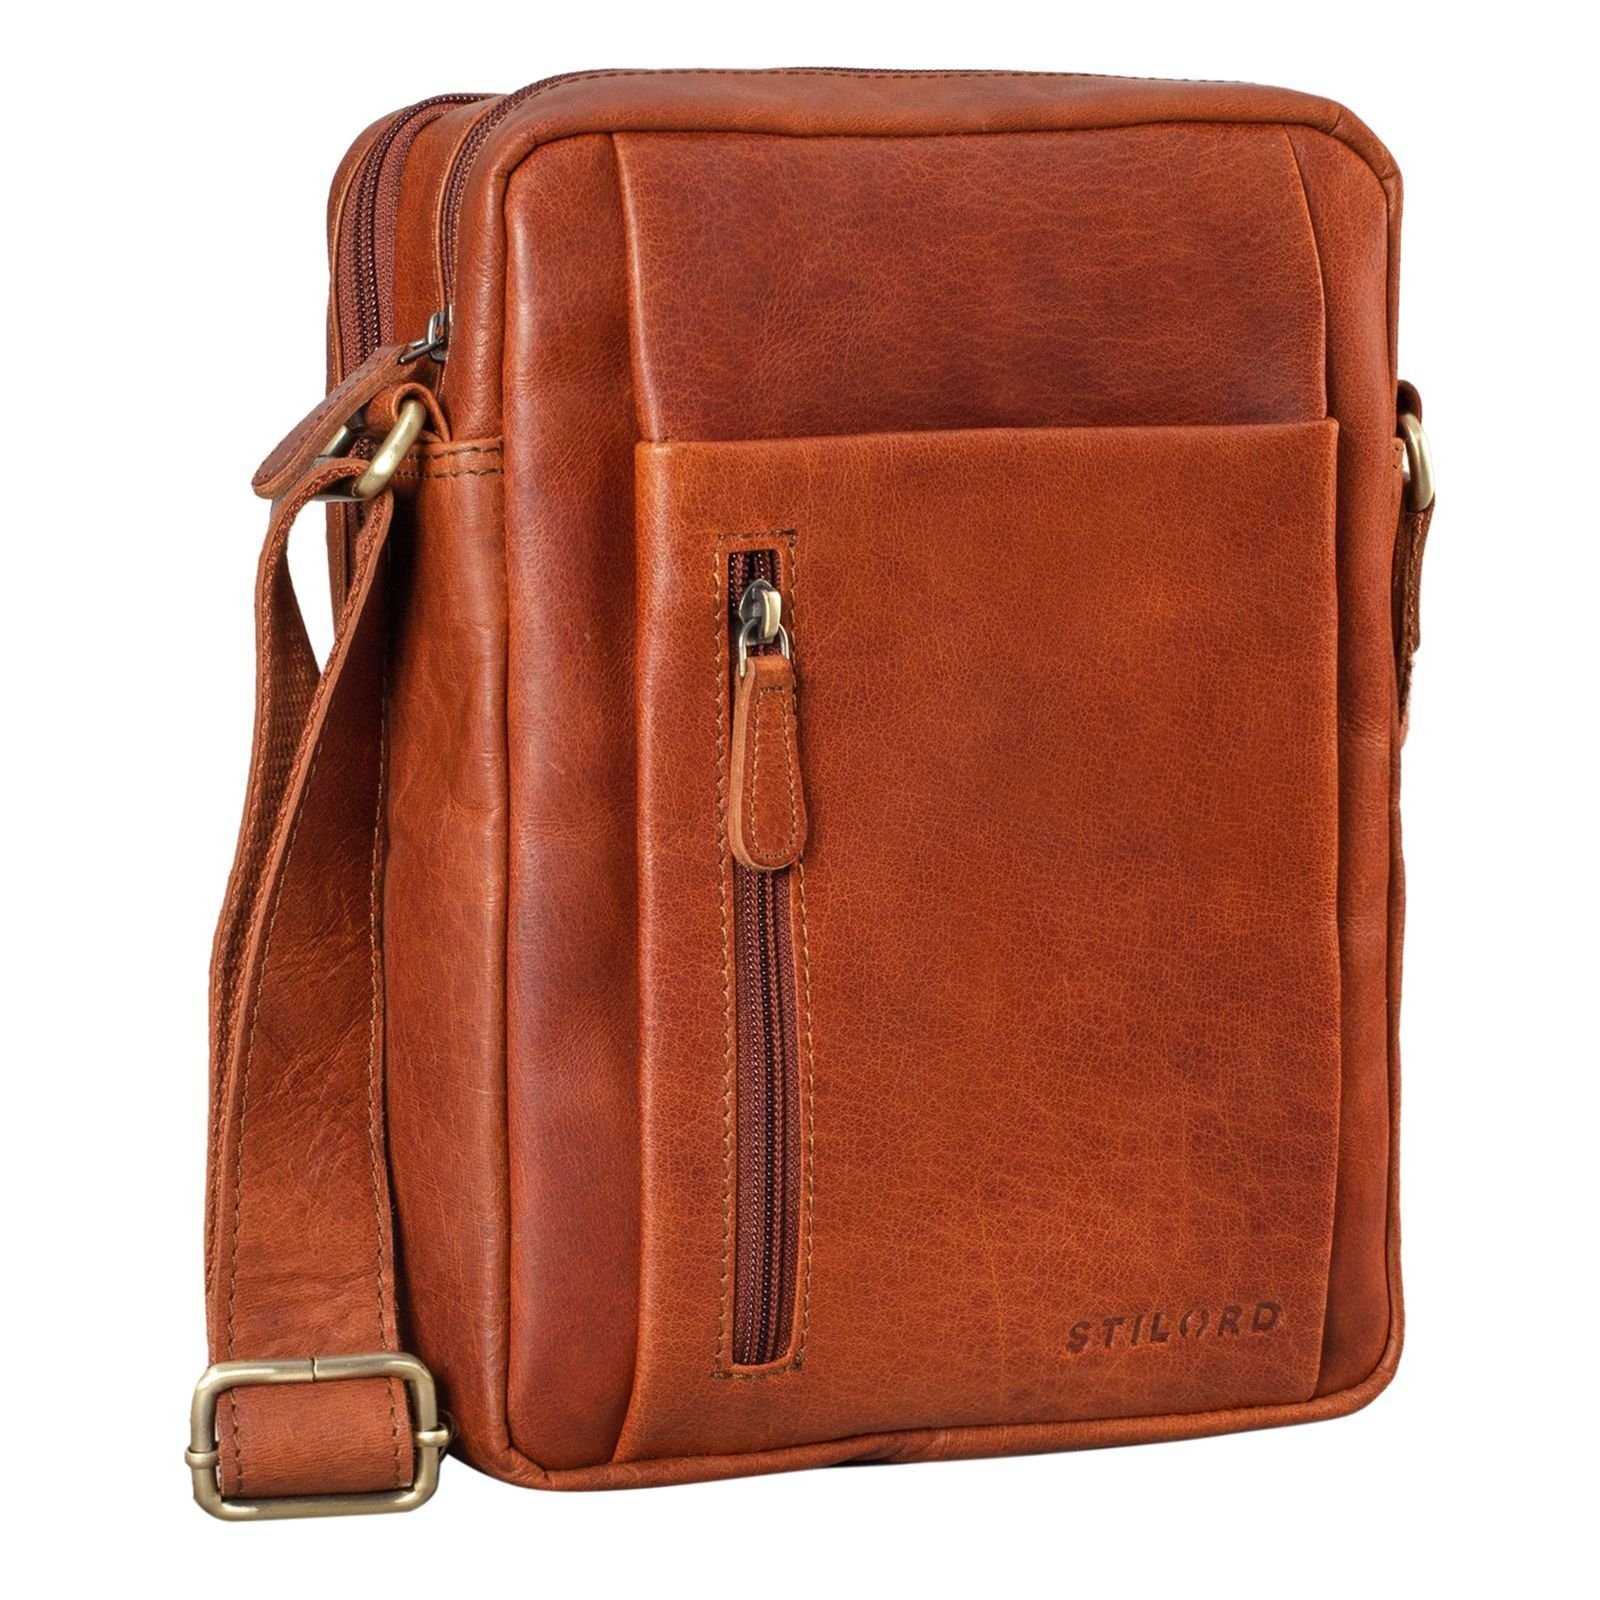 STILORD Messenger Bag "Irving" Vintage Leder Tasche Klein maraska - braun